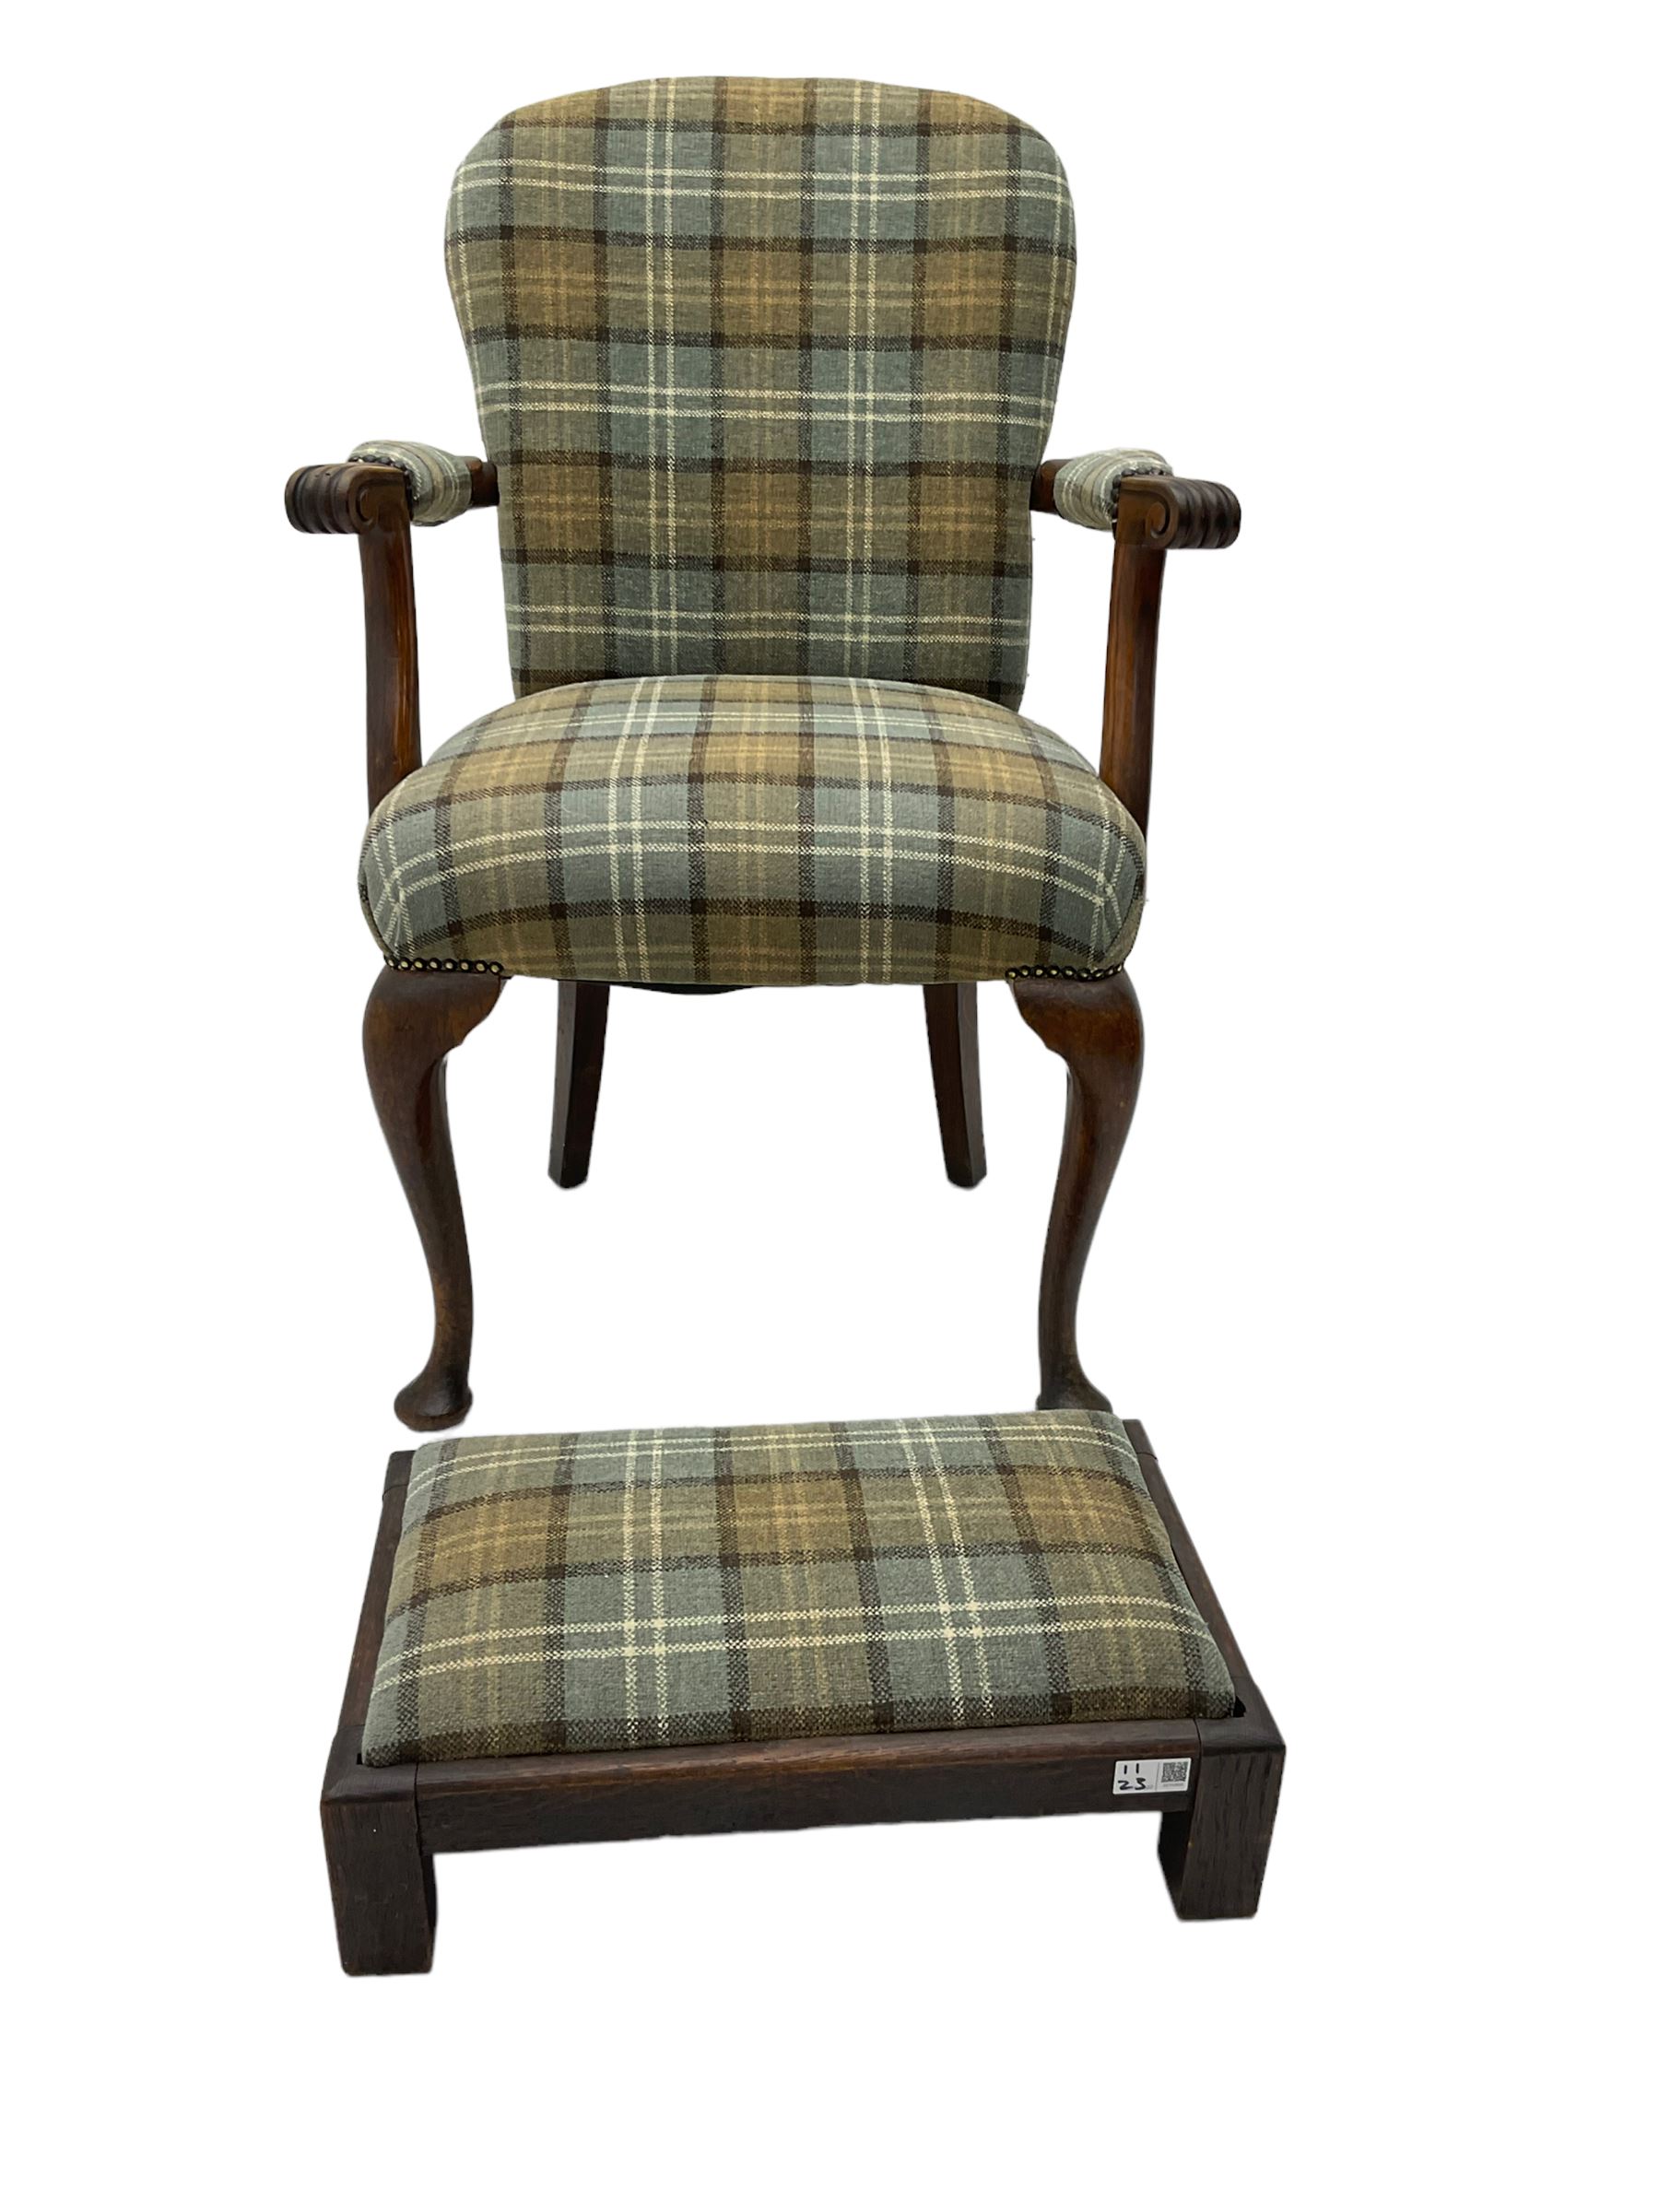 Late 19th century walnut open armchair in tartan fabric